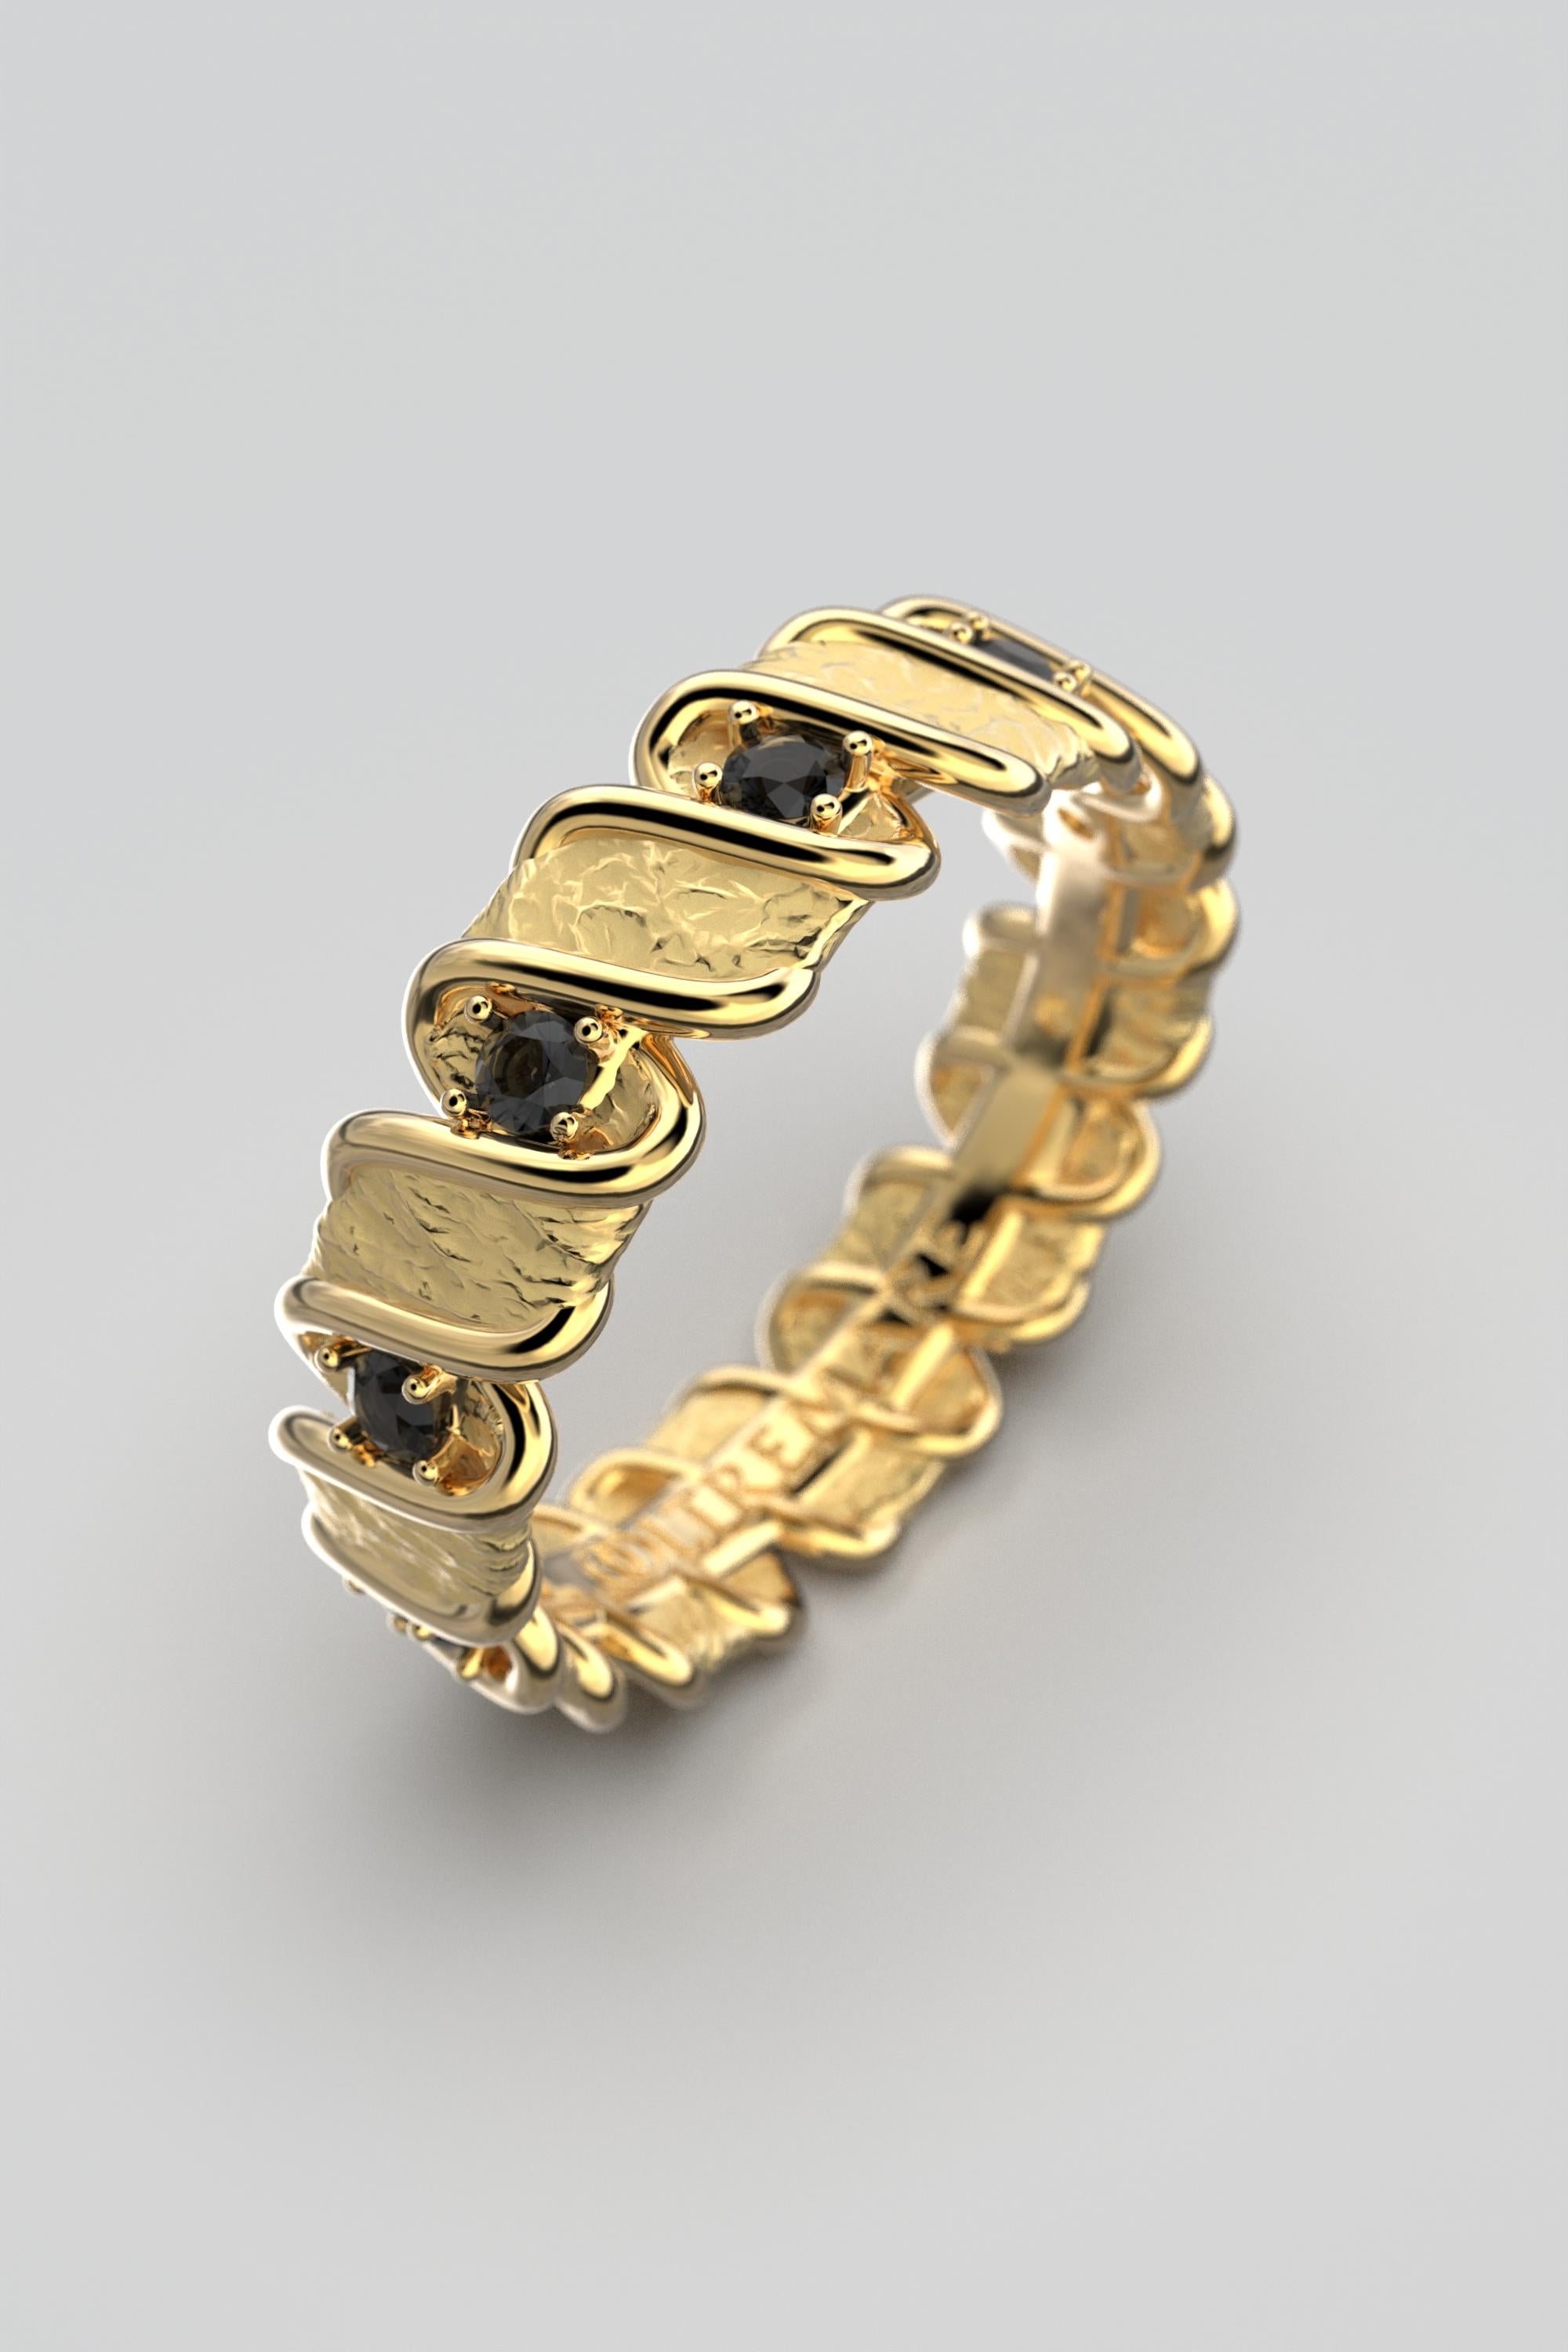 En vente :  Anneau en or 18 carats fabriqué en Italie par Oltremare Gioielli 8